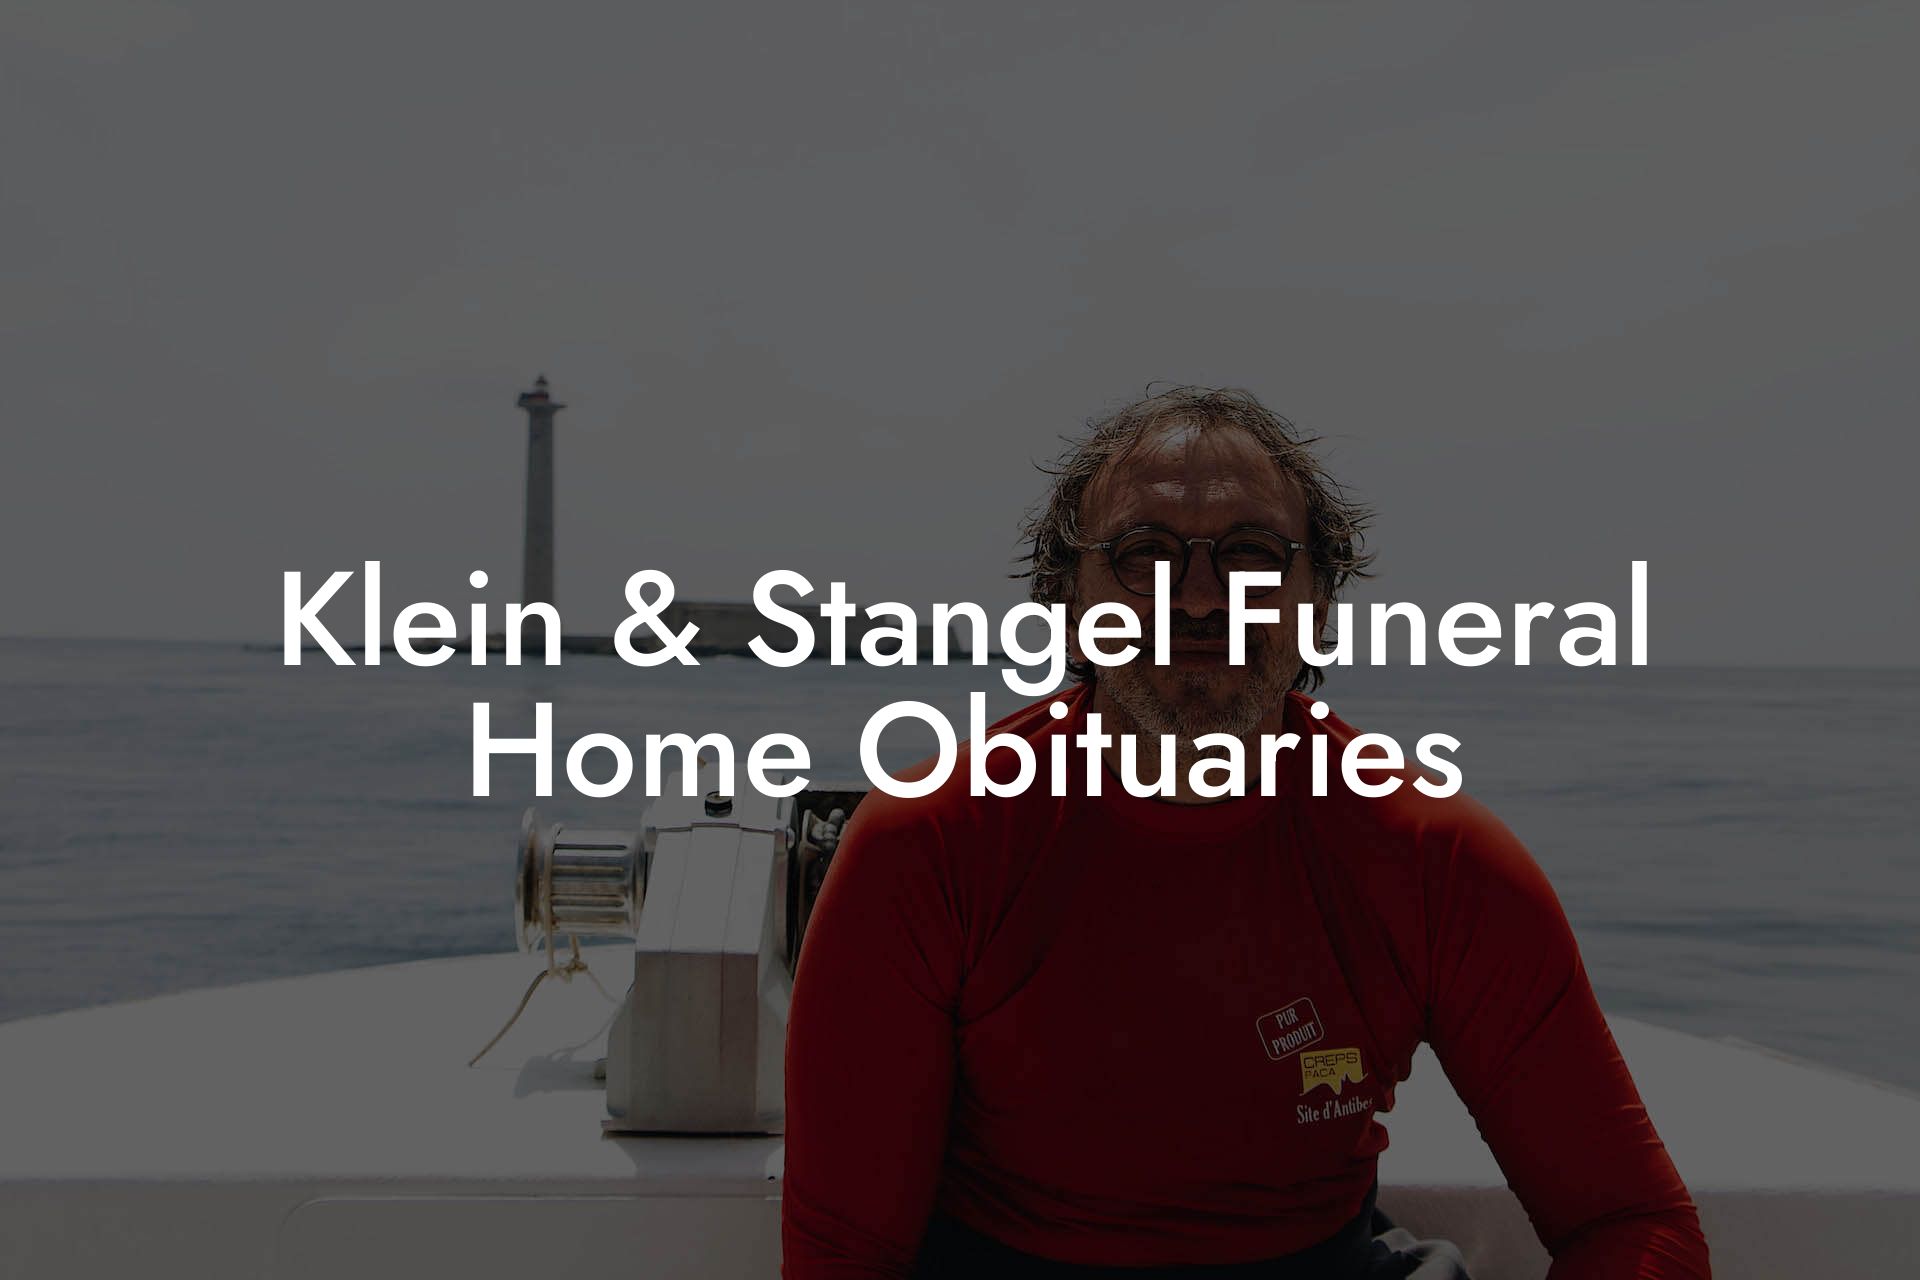 Klein & Stangel Funeral Home Obituaries